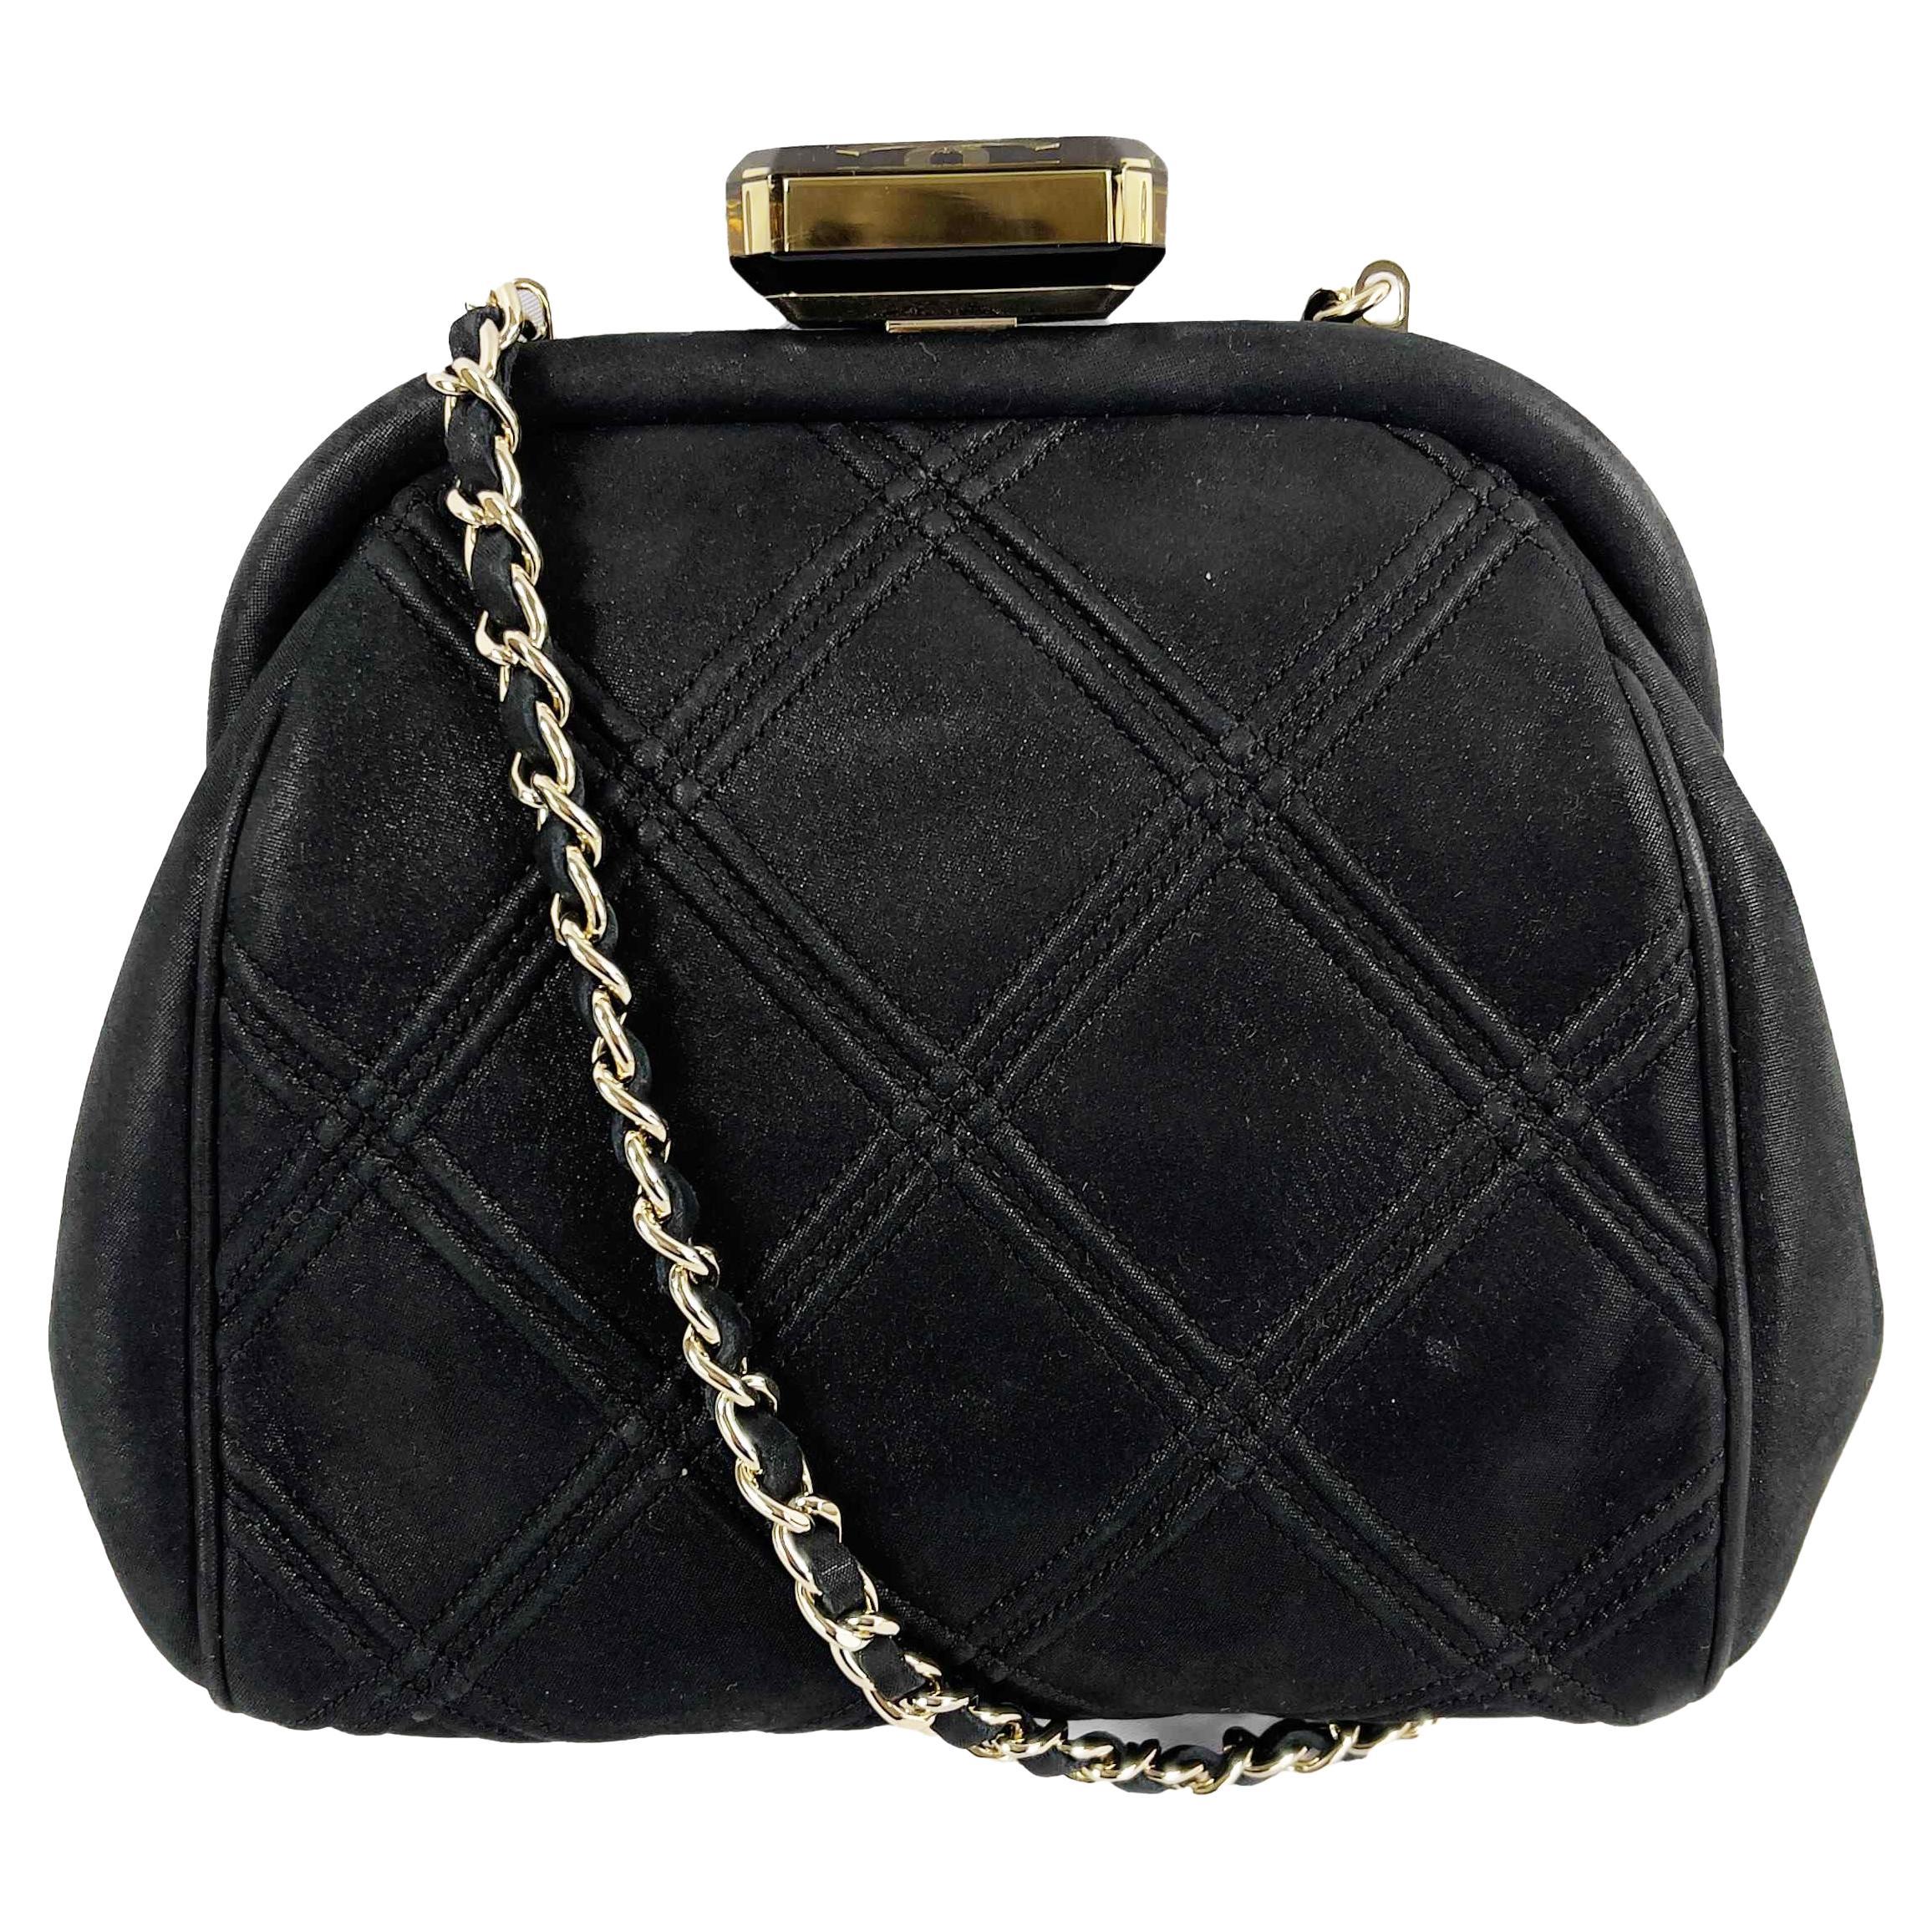 Chanel Black Mini Handbag - 242 For Sale on 1stDibs  chanel black mini bag,  chanel small black bag, chanel mini bag black